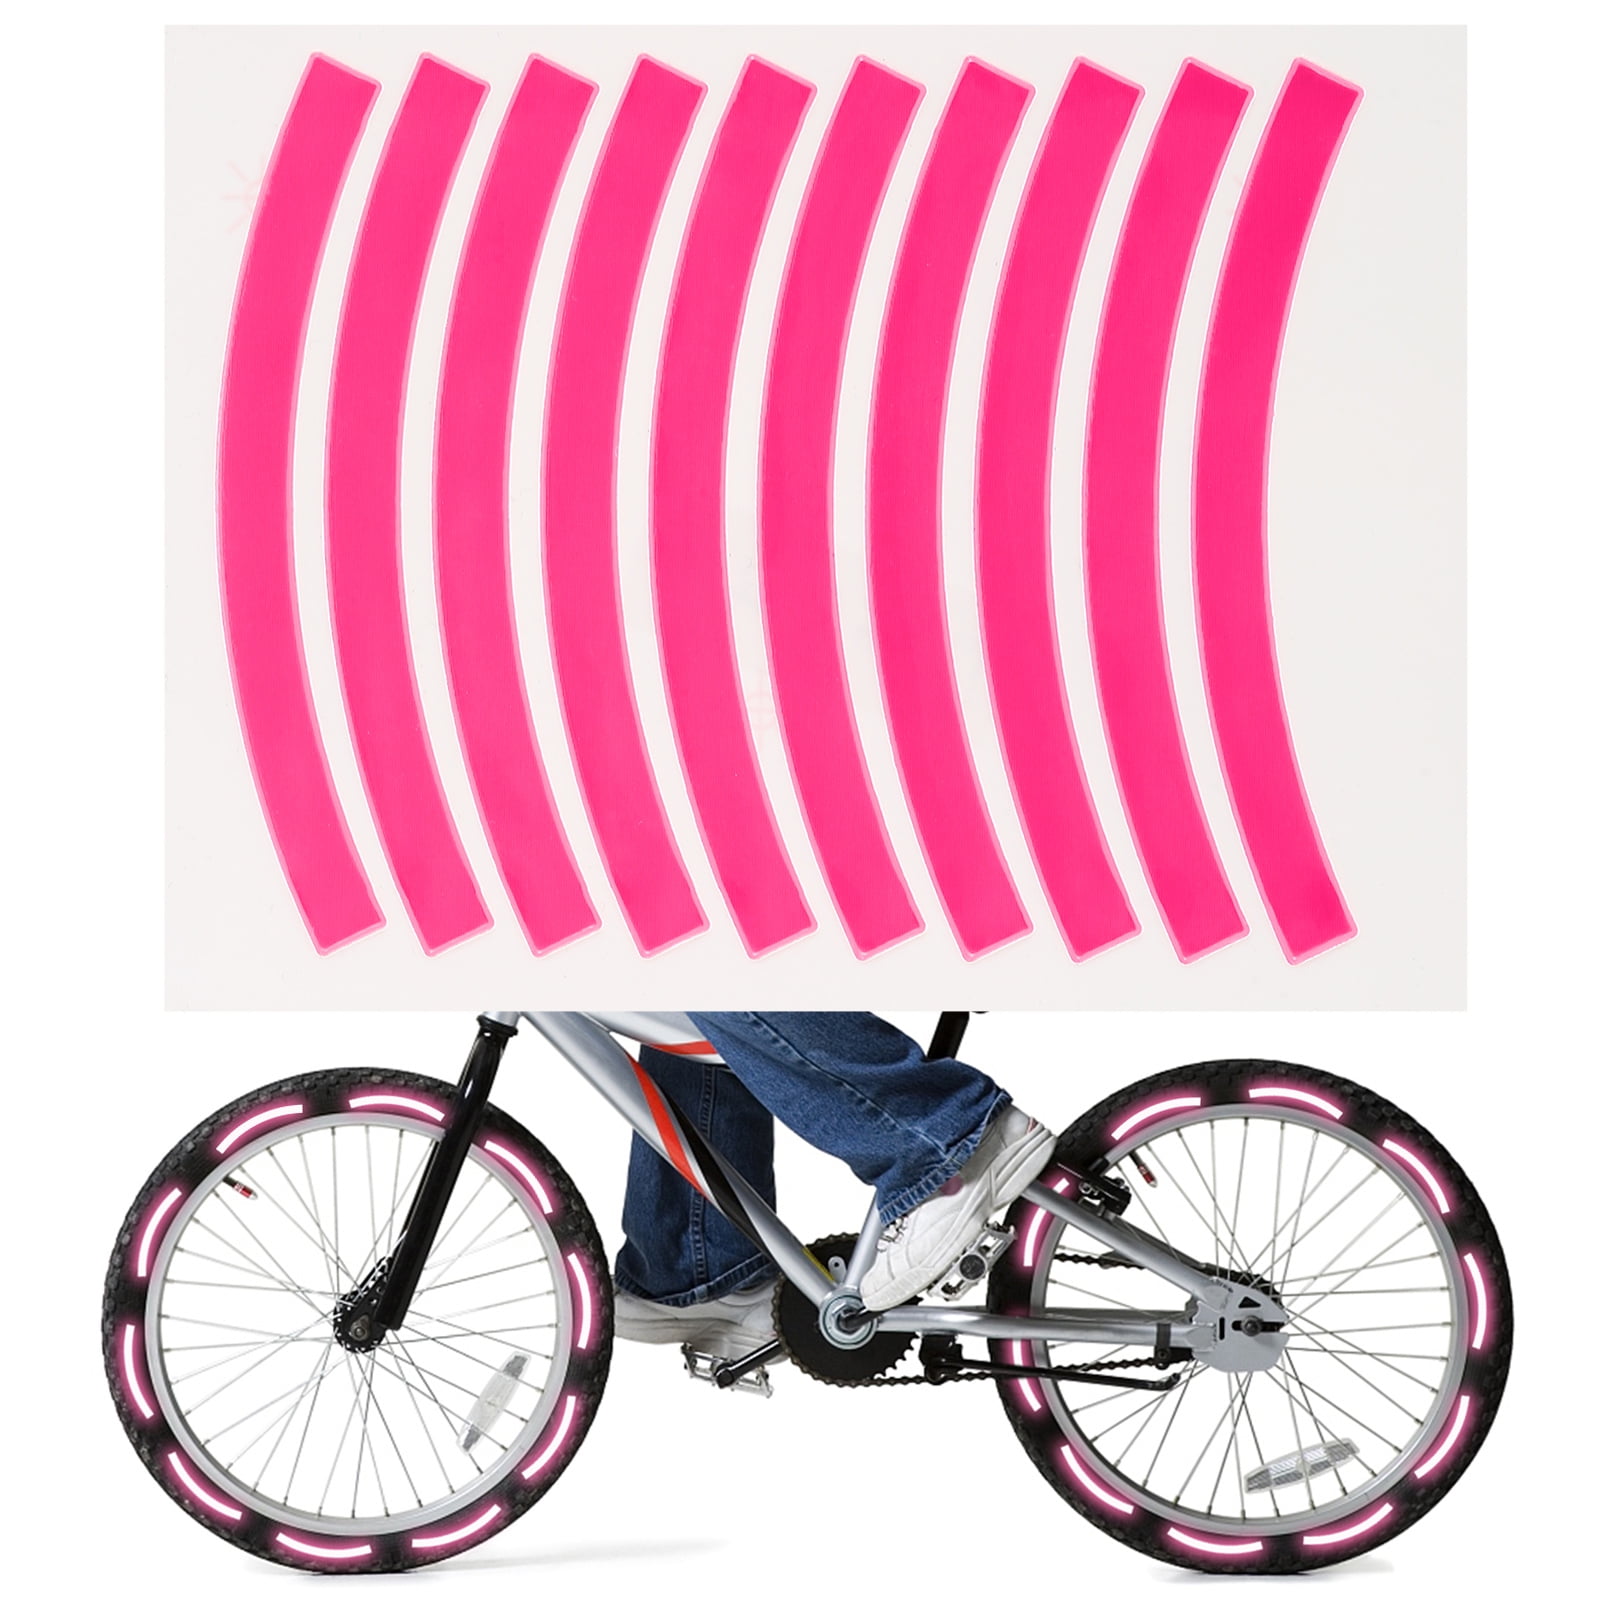 3m Sticker Kit Sports Reflective Reflector for Scooter Bike Kids NEW